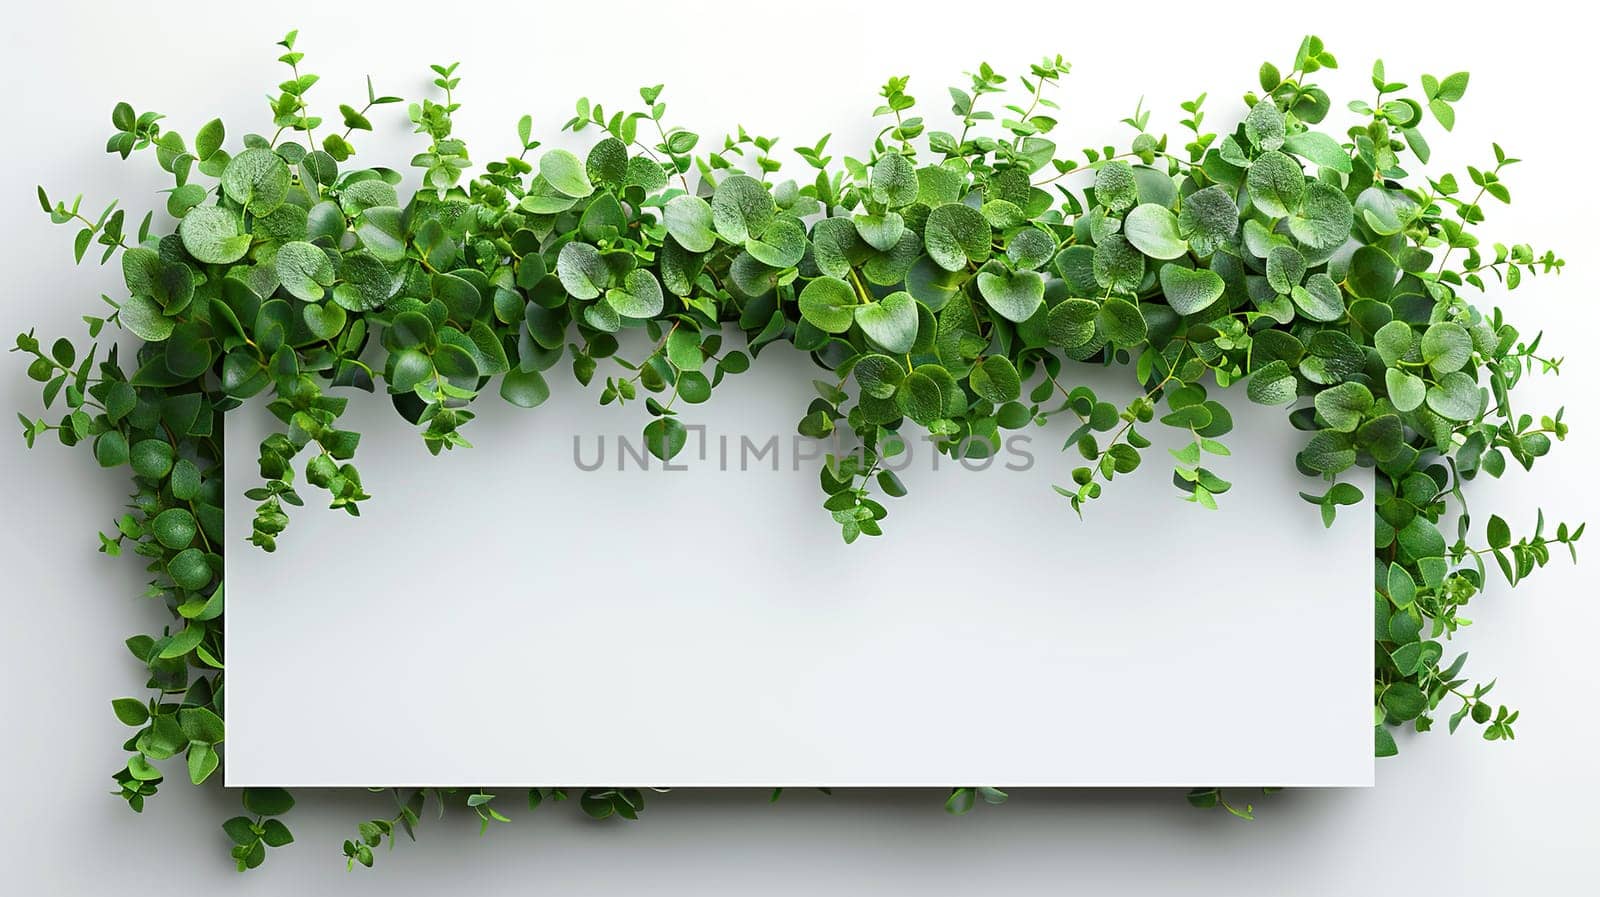 Modern white green background with greenery frame. Cover background for website design, social media advertising banner, flyer, invitation card.